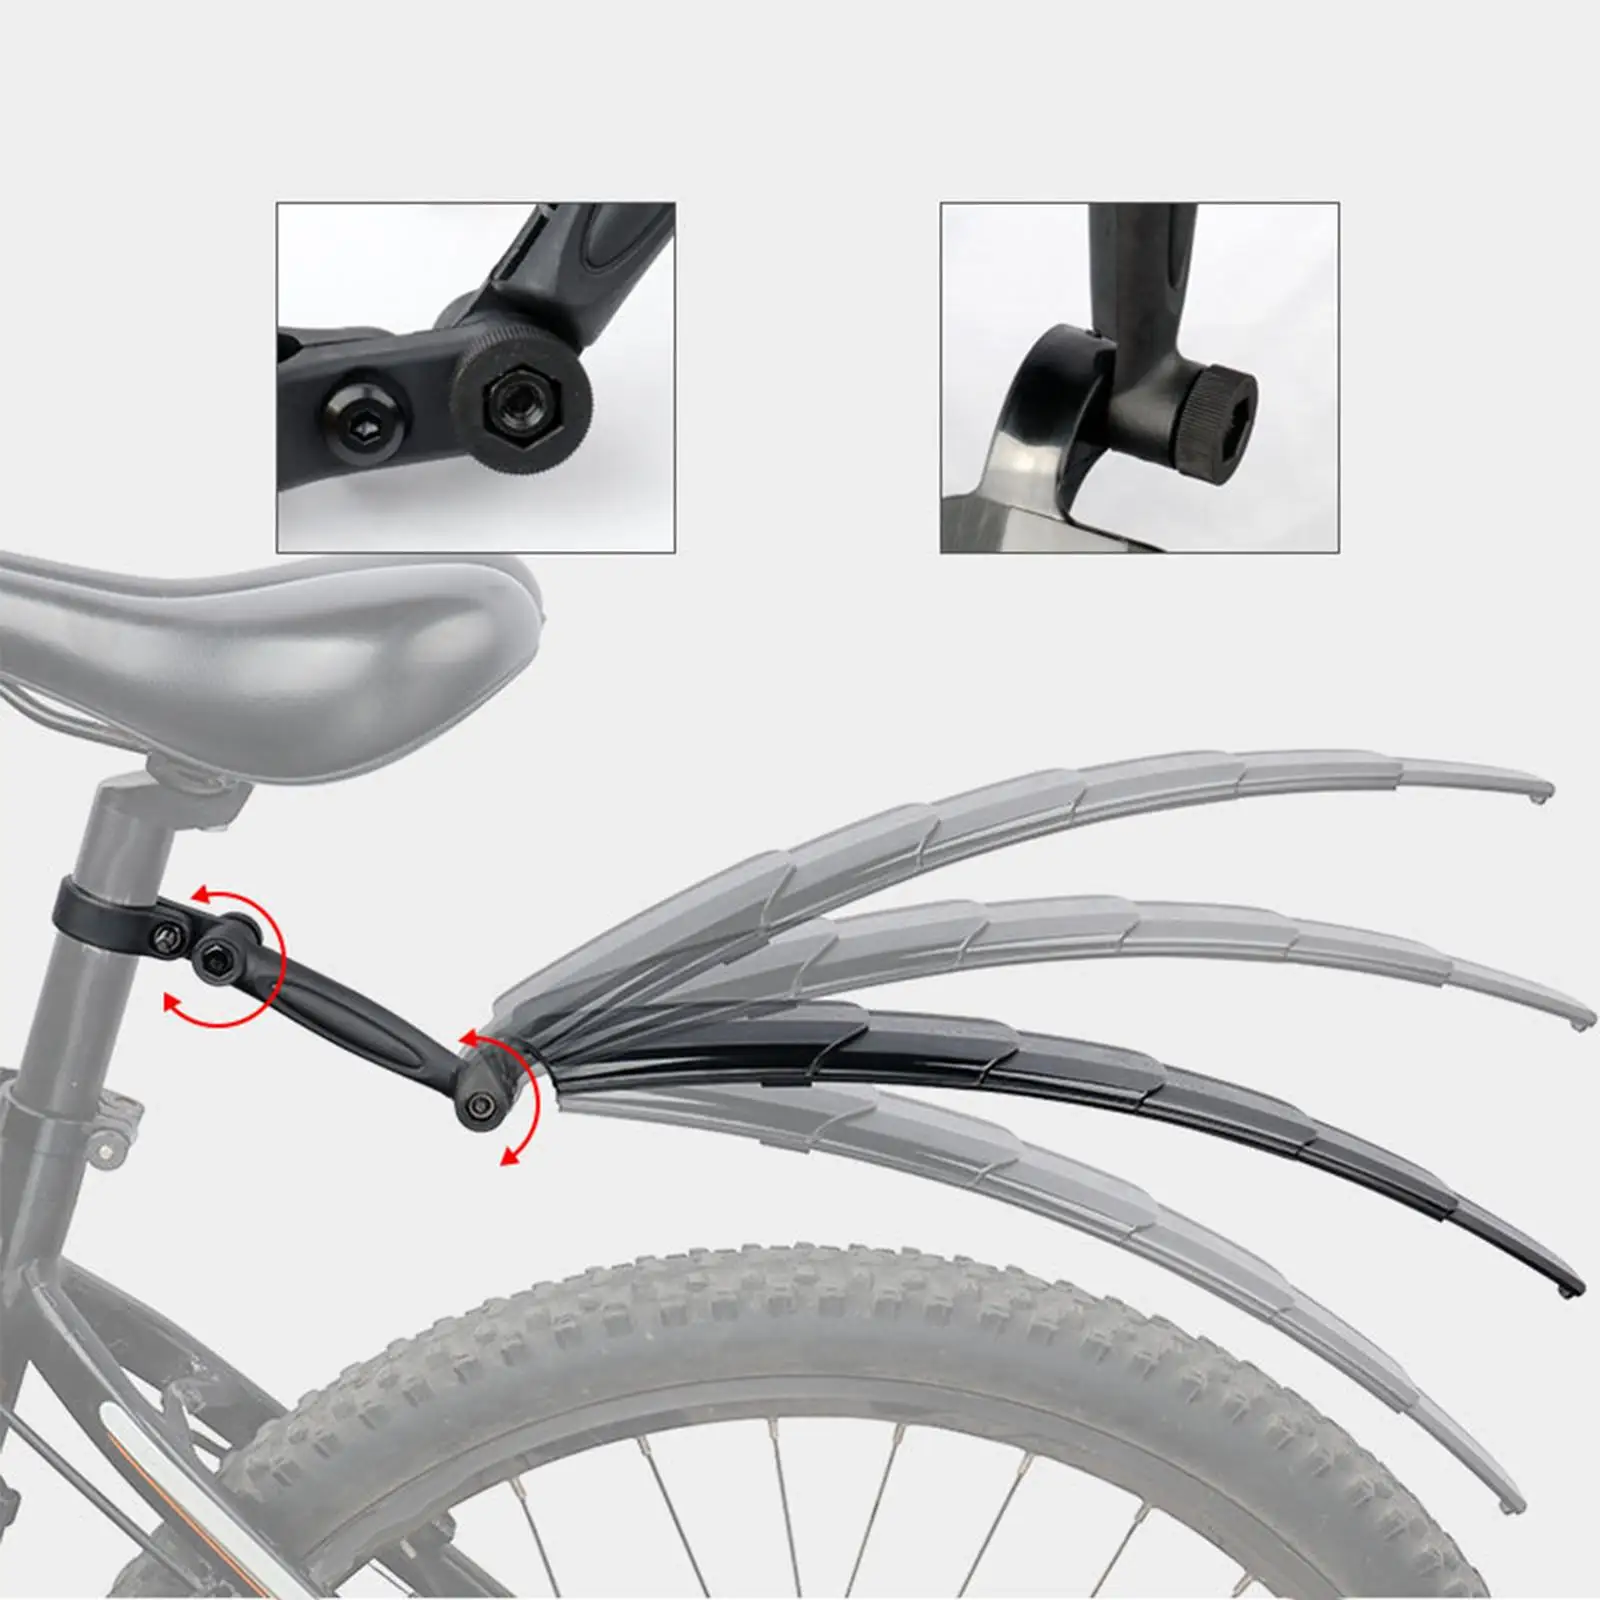 Telescopic Bike Mudguard Set Font/Rear Mud Guards Wheel Protector Mudflap Full Cover for Bicycle Road Bike Bike MTB Cycling